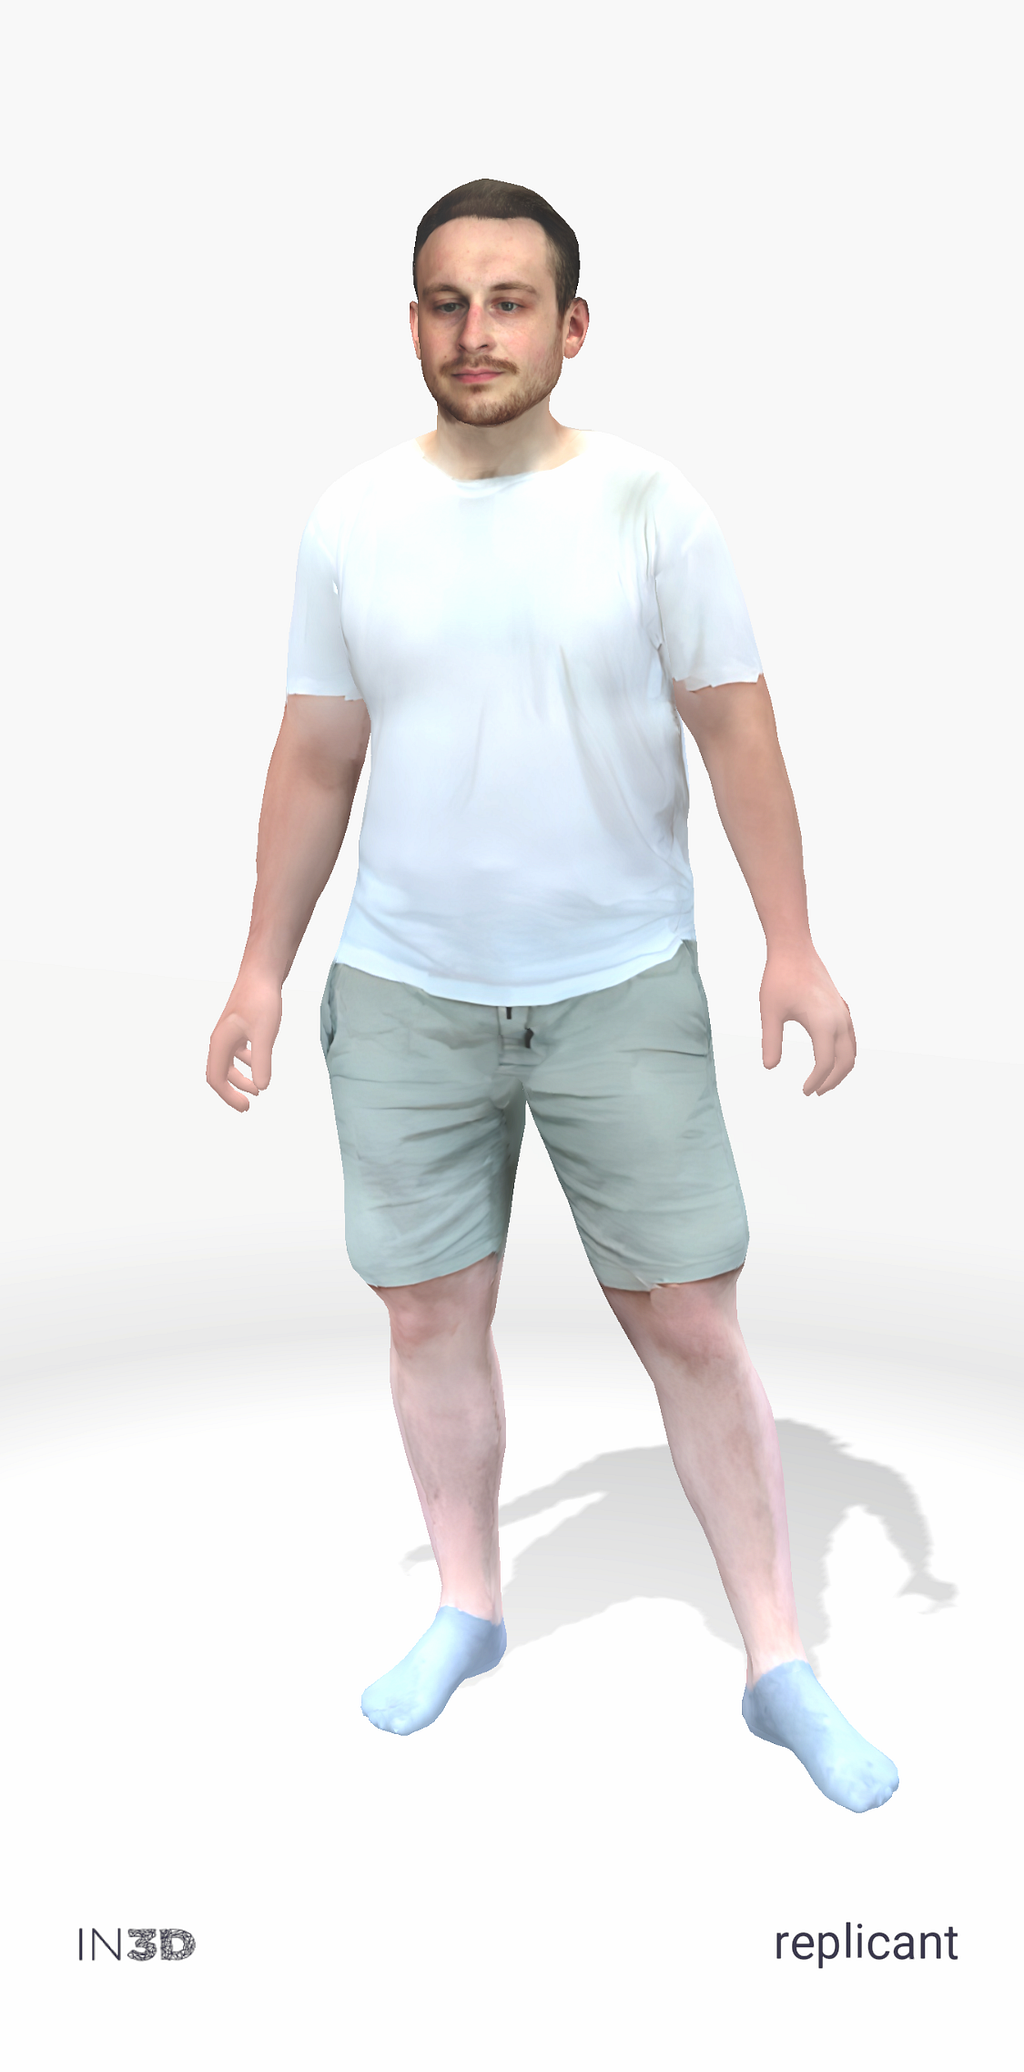 My full body avatar from In3D App